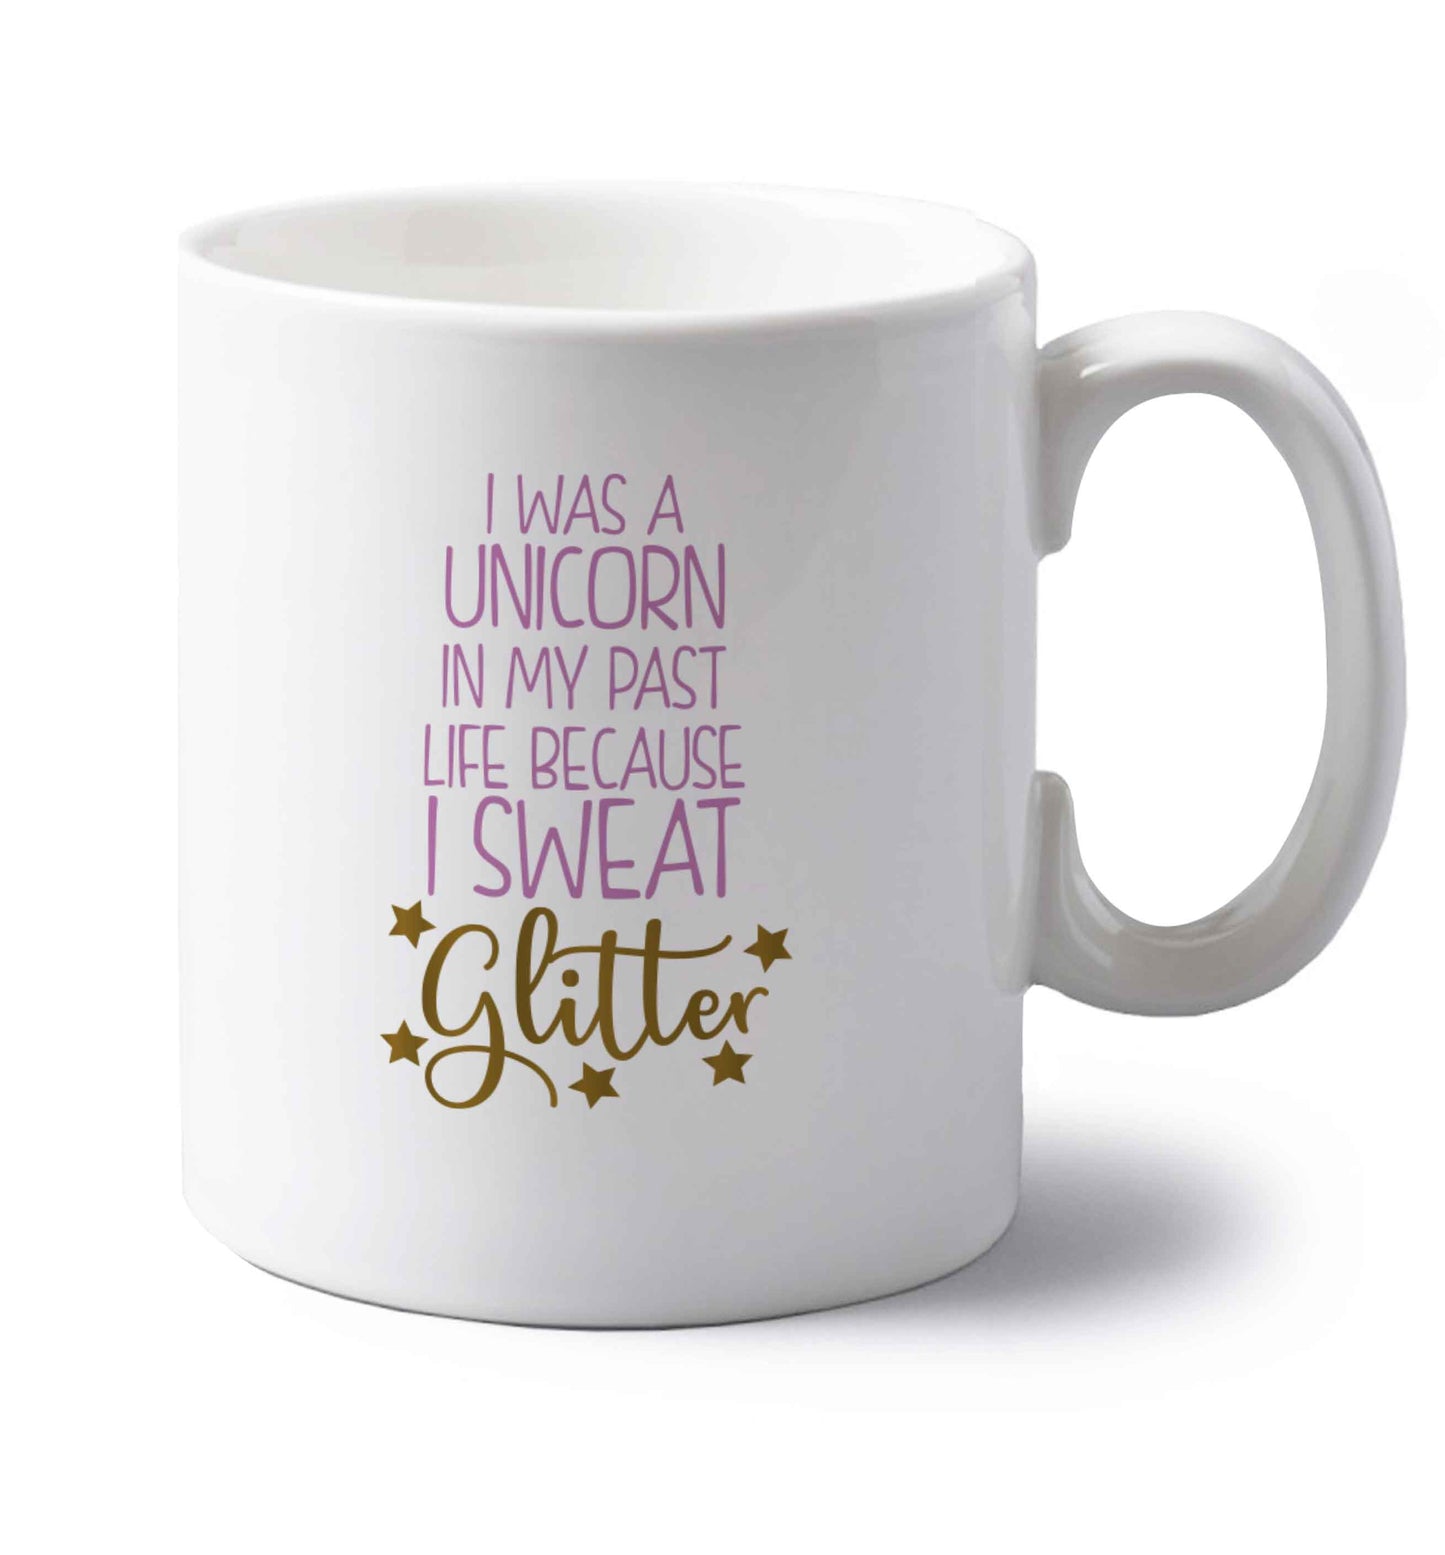 I was a unicorn in my past life because I sweat glitter left handed white ceramic mug 